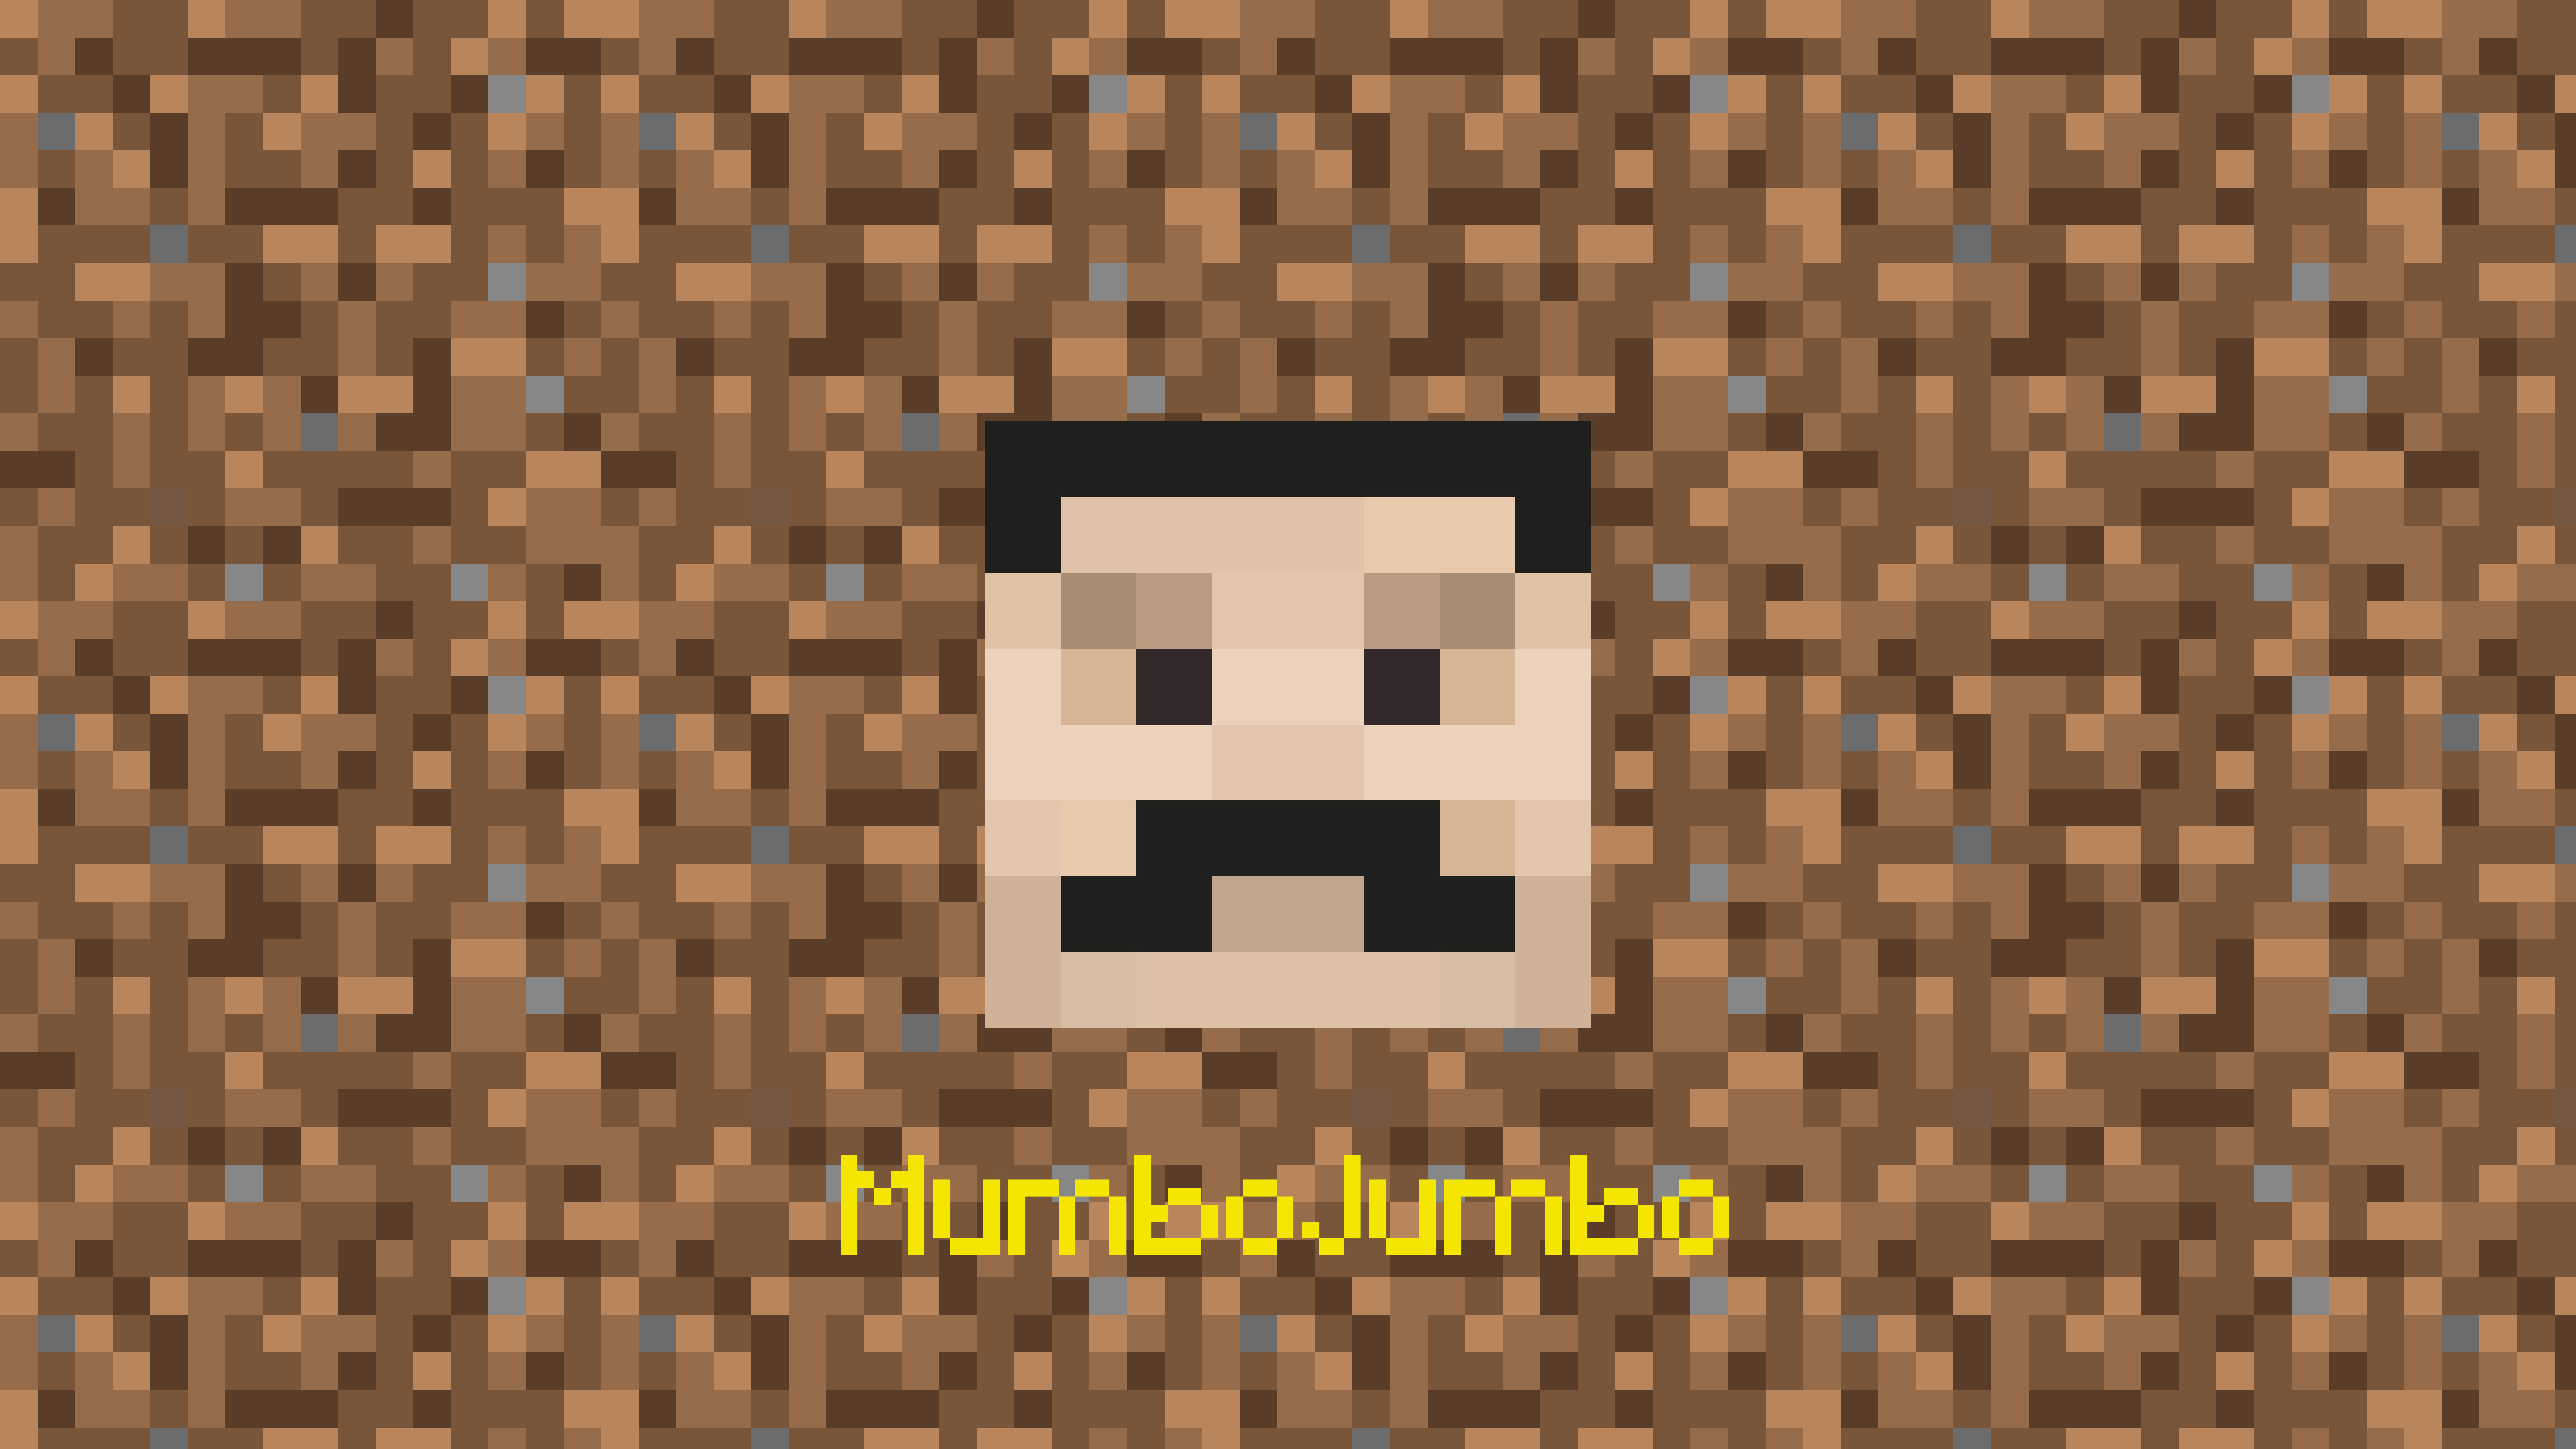 Minecraft Head Project 6 Mumbojumbo 4k Ultra Hd Wallpaper Background